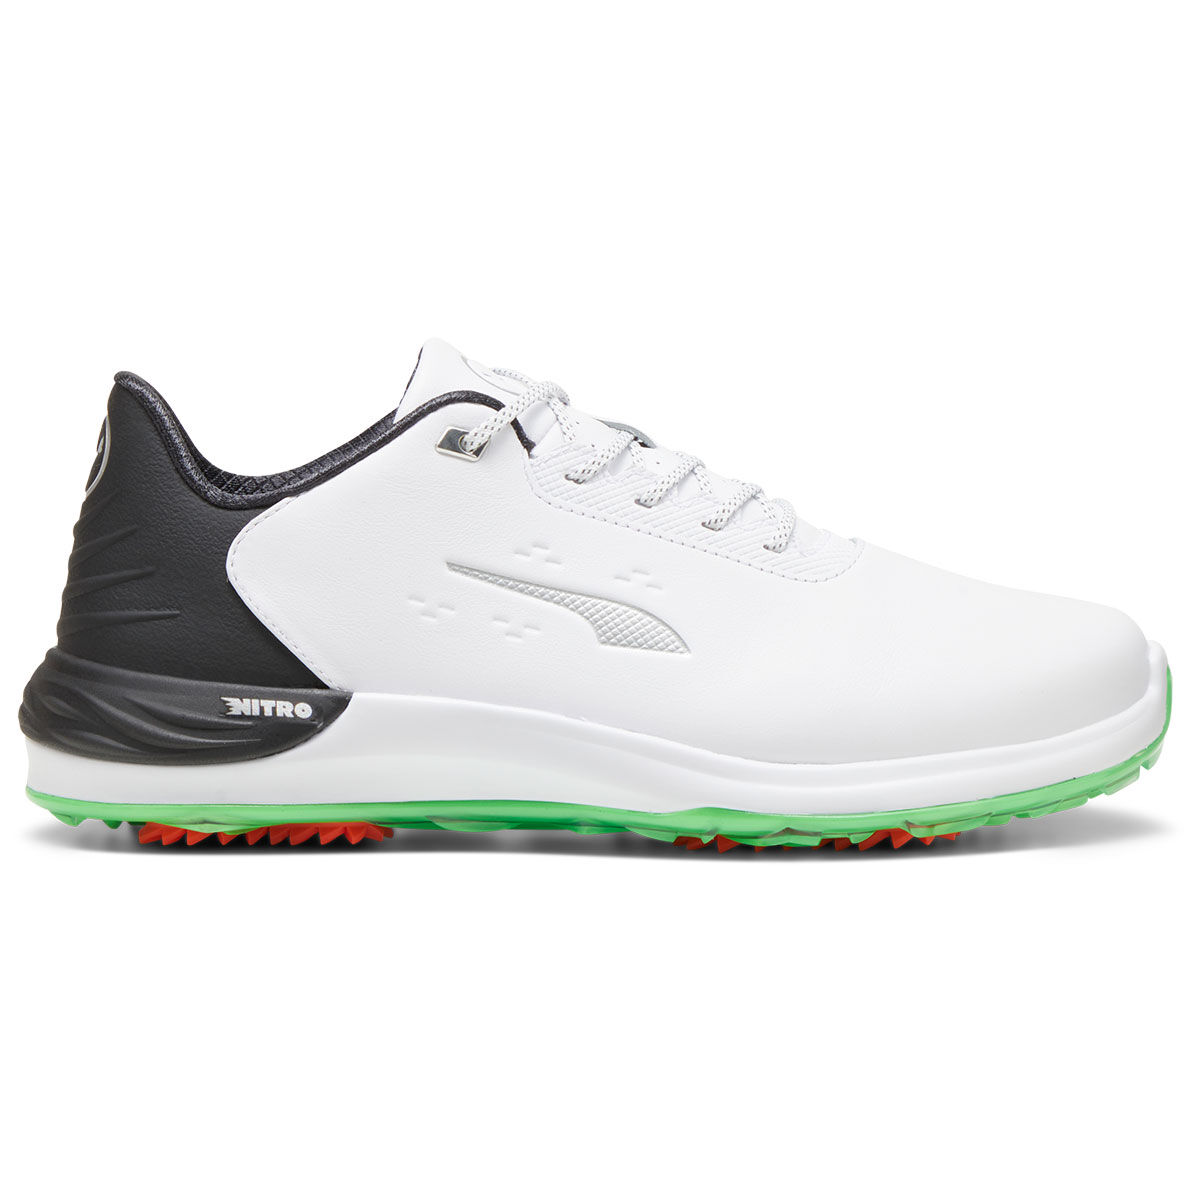 PUMA Men’s Phantomcat NITRO + Waterproof Spiked Golf Shoes, Mens, White/black/fluro green pes, 9 | American Golf